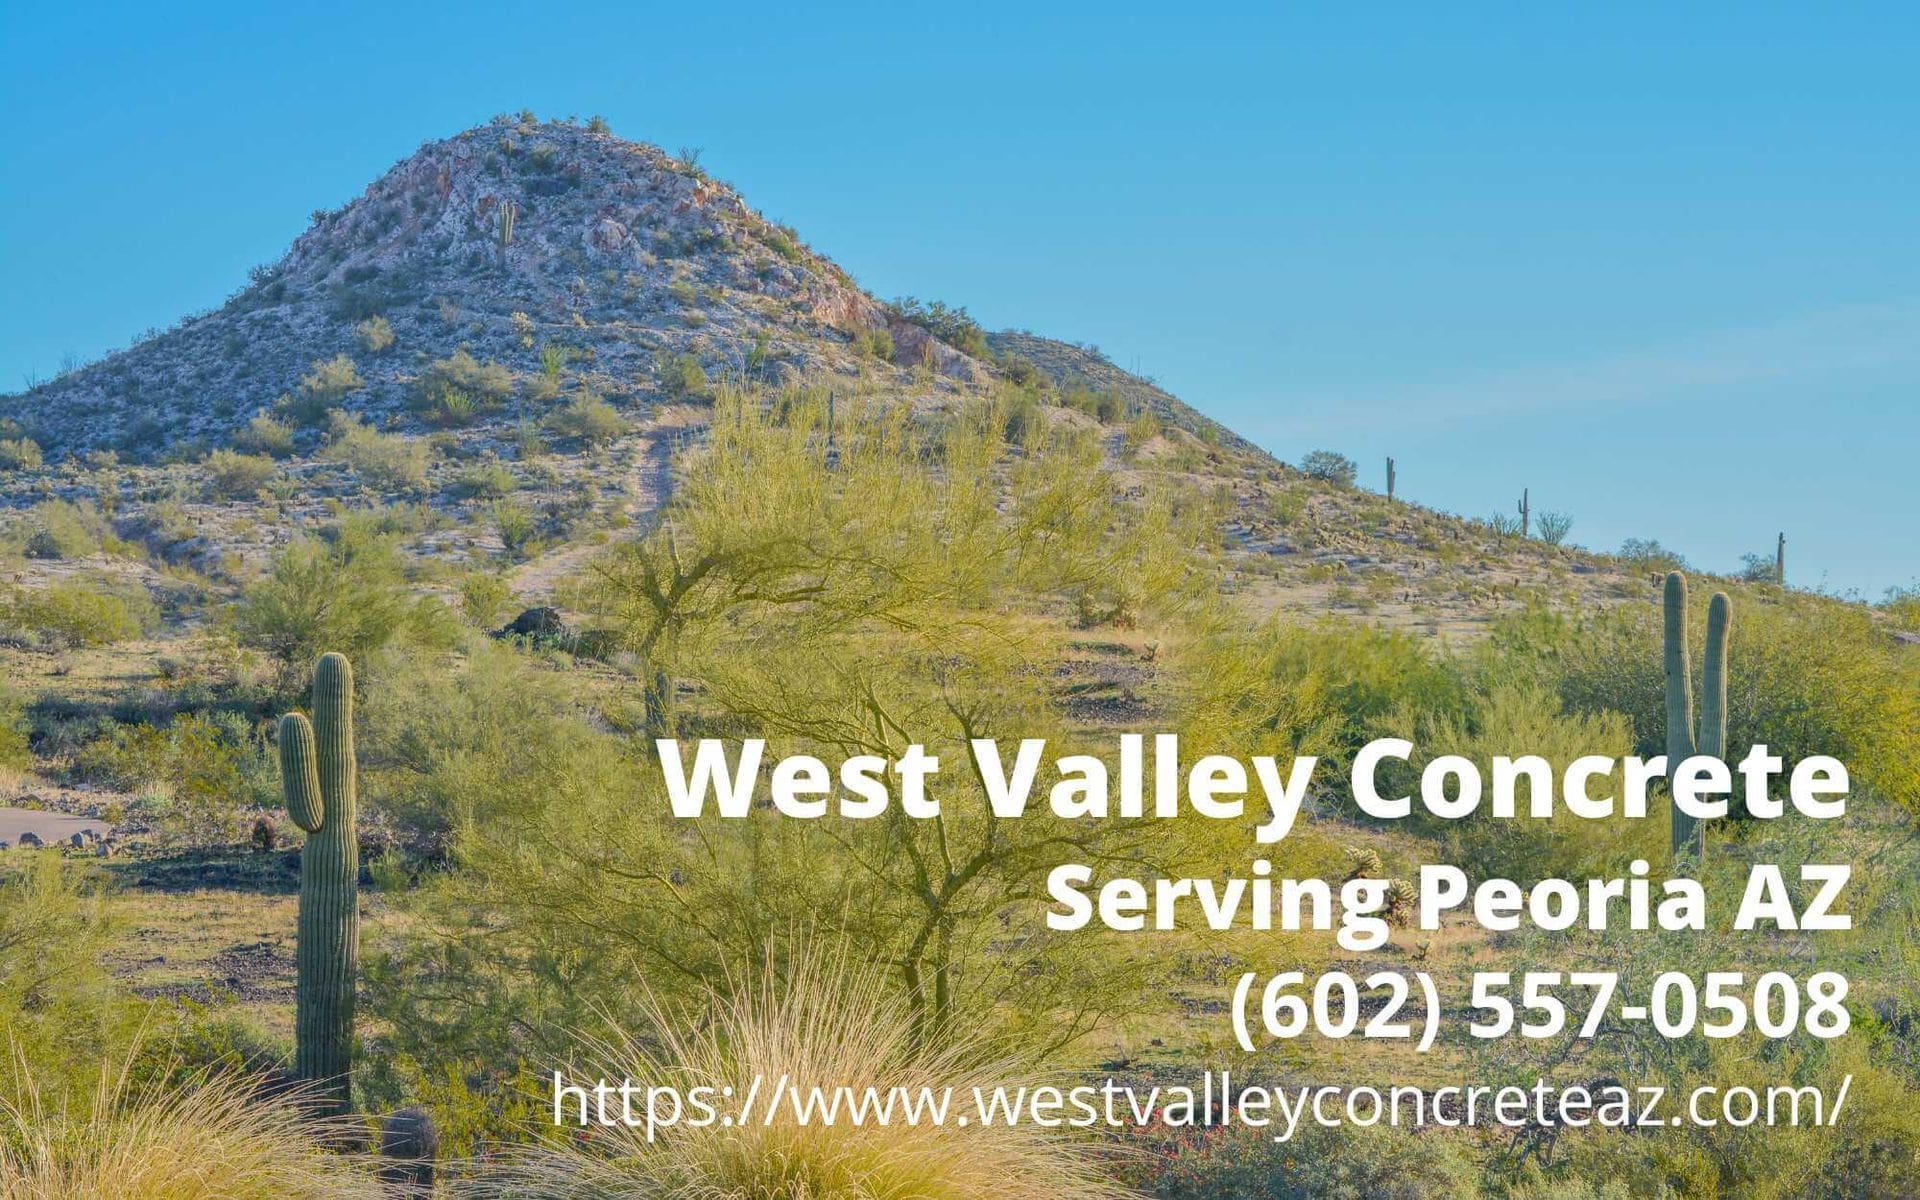 business info of West Valley Concrete - a concrete company serving Peoria, AZ